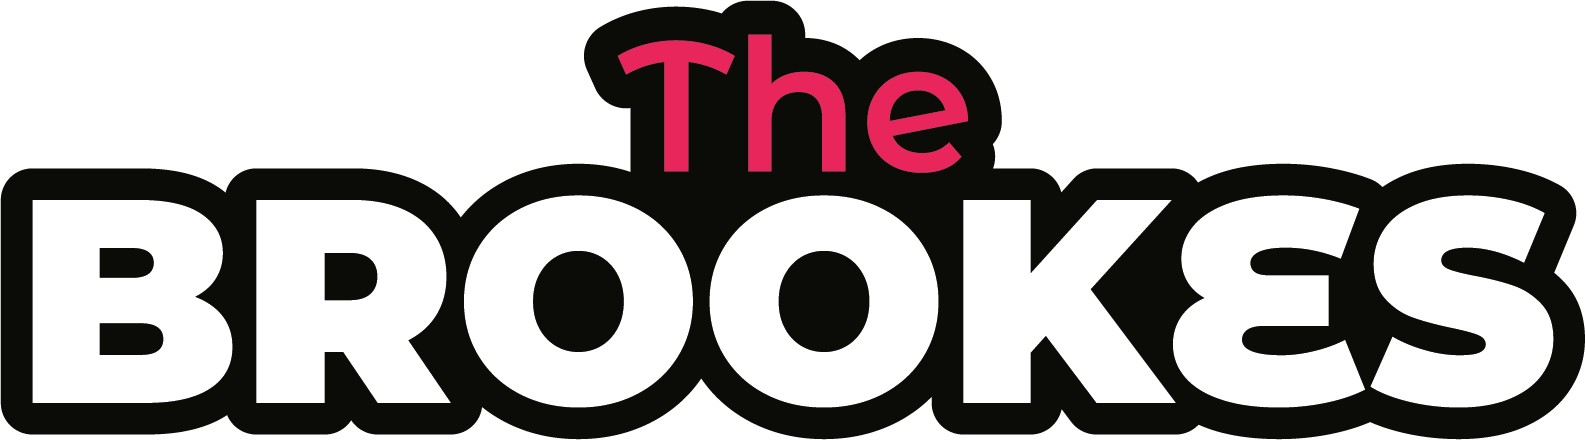 the brookes logo